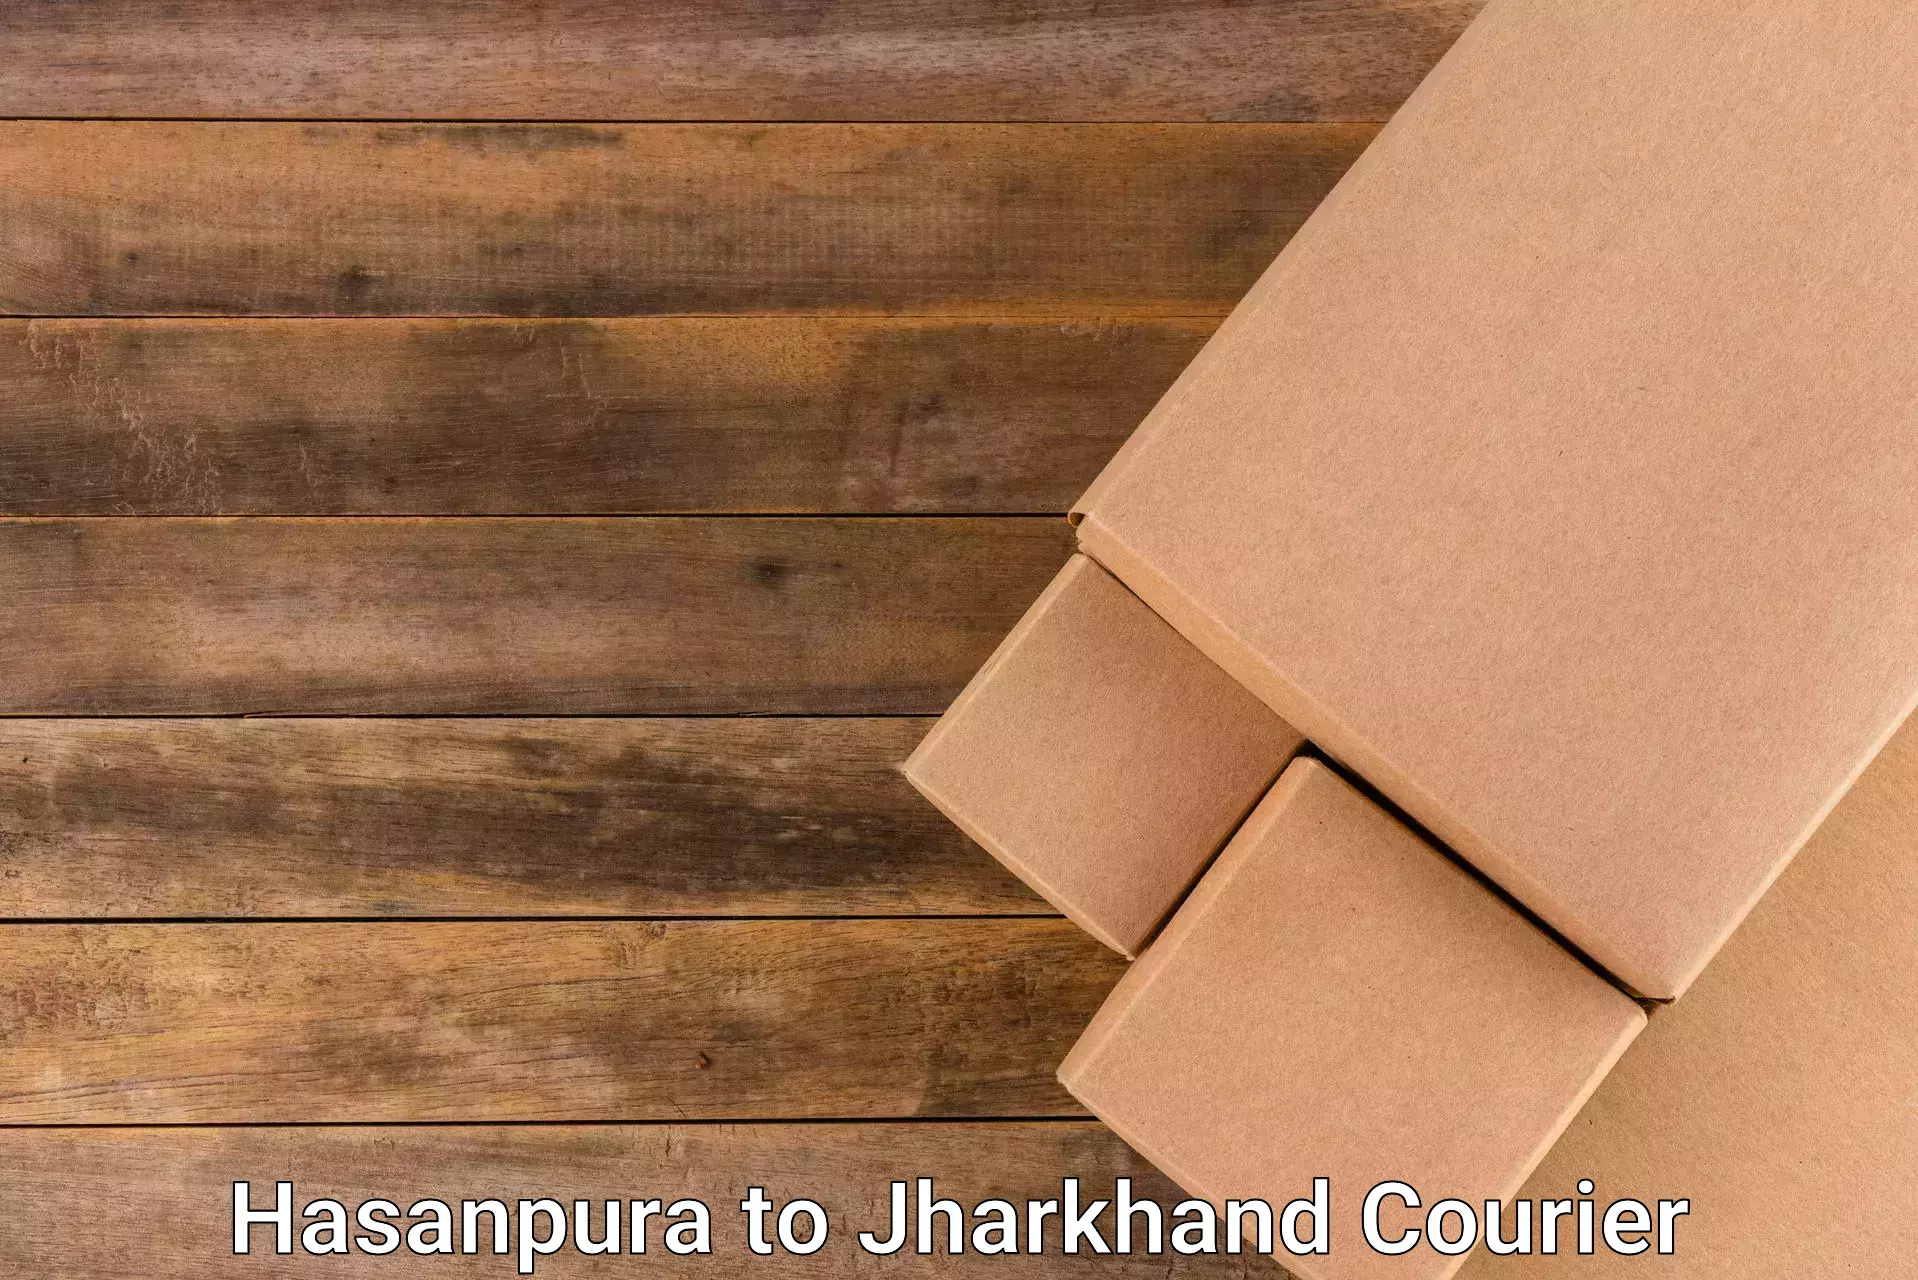 Efficient order fulfillment in Hasanpura to Barharwa